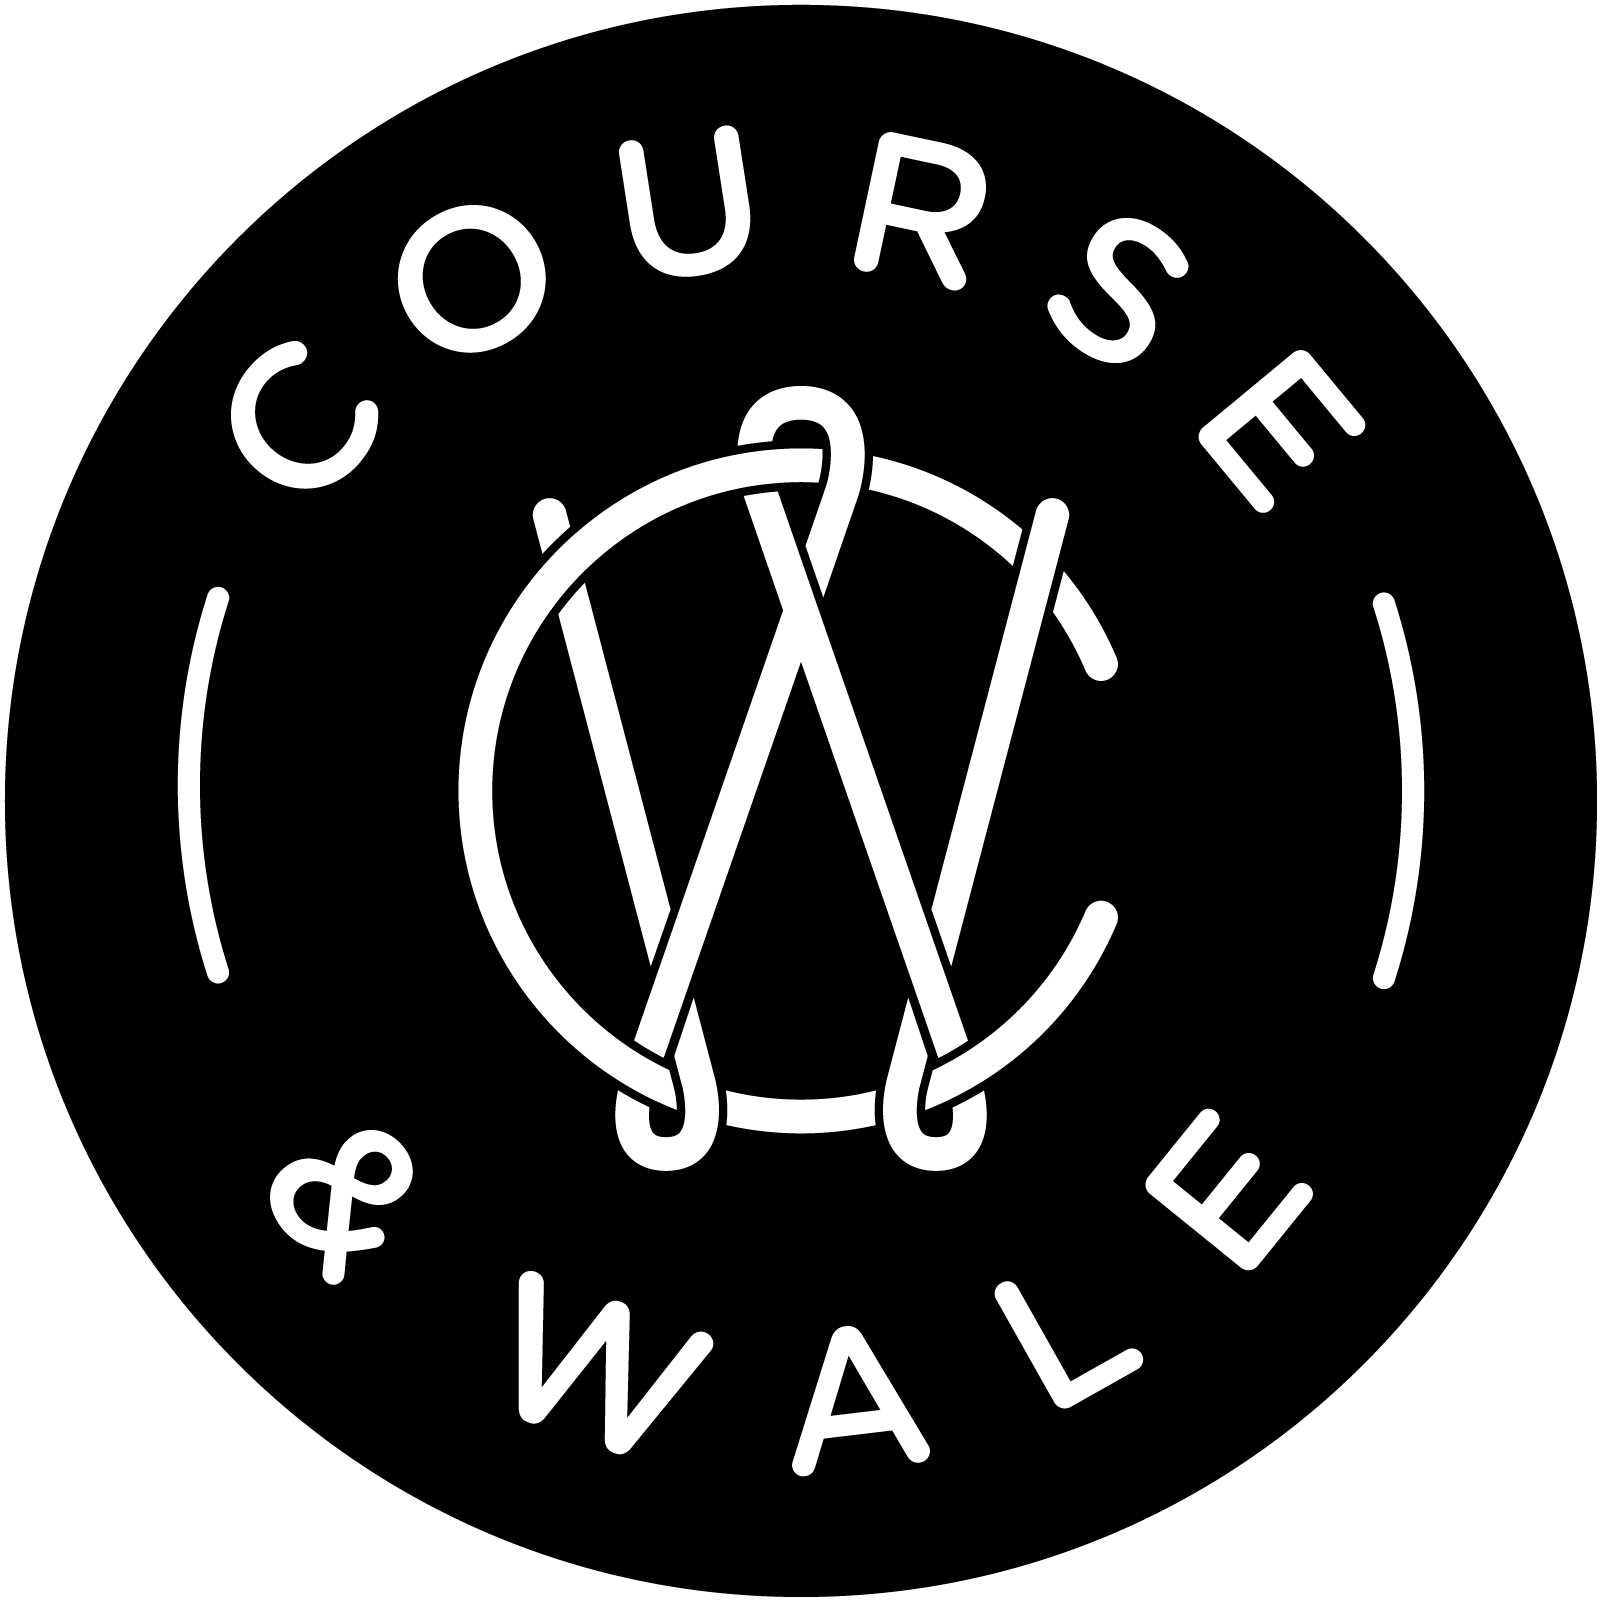 Course & Wale Logo Black